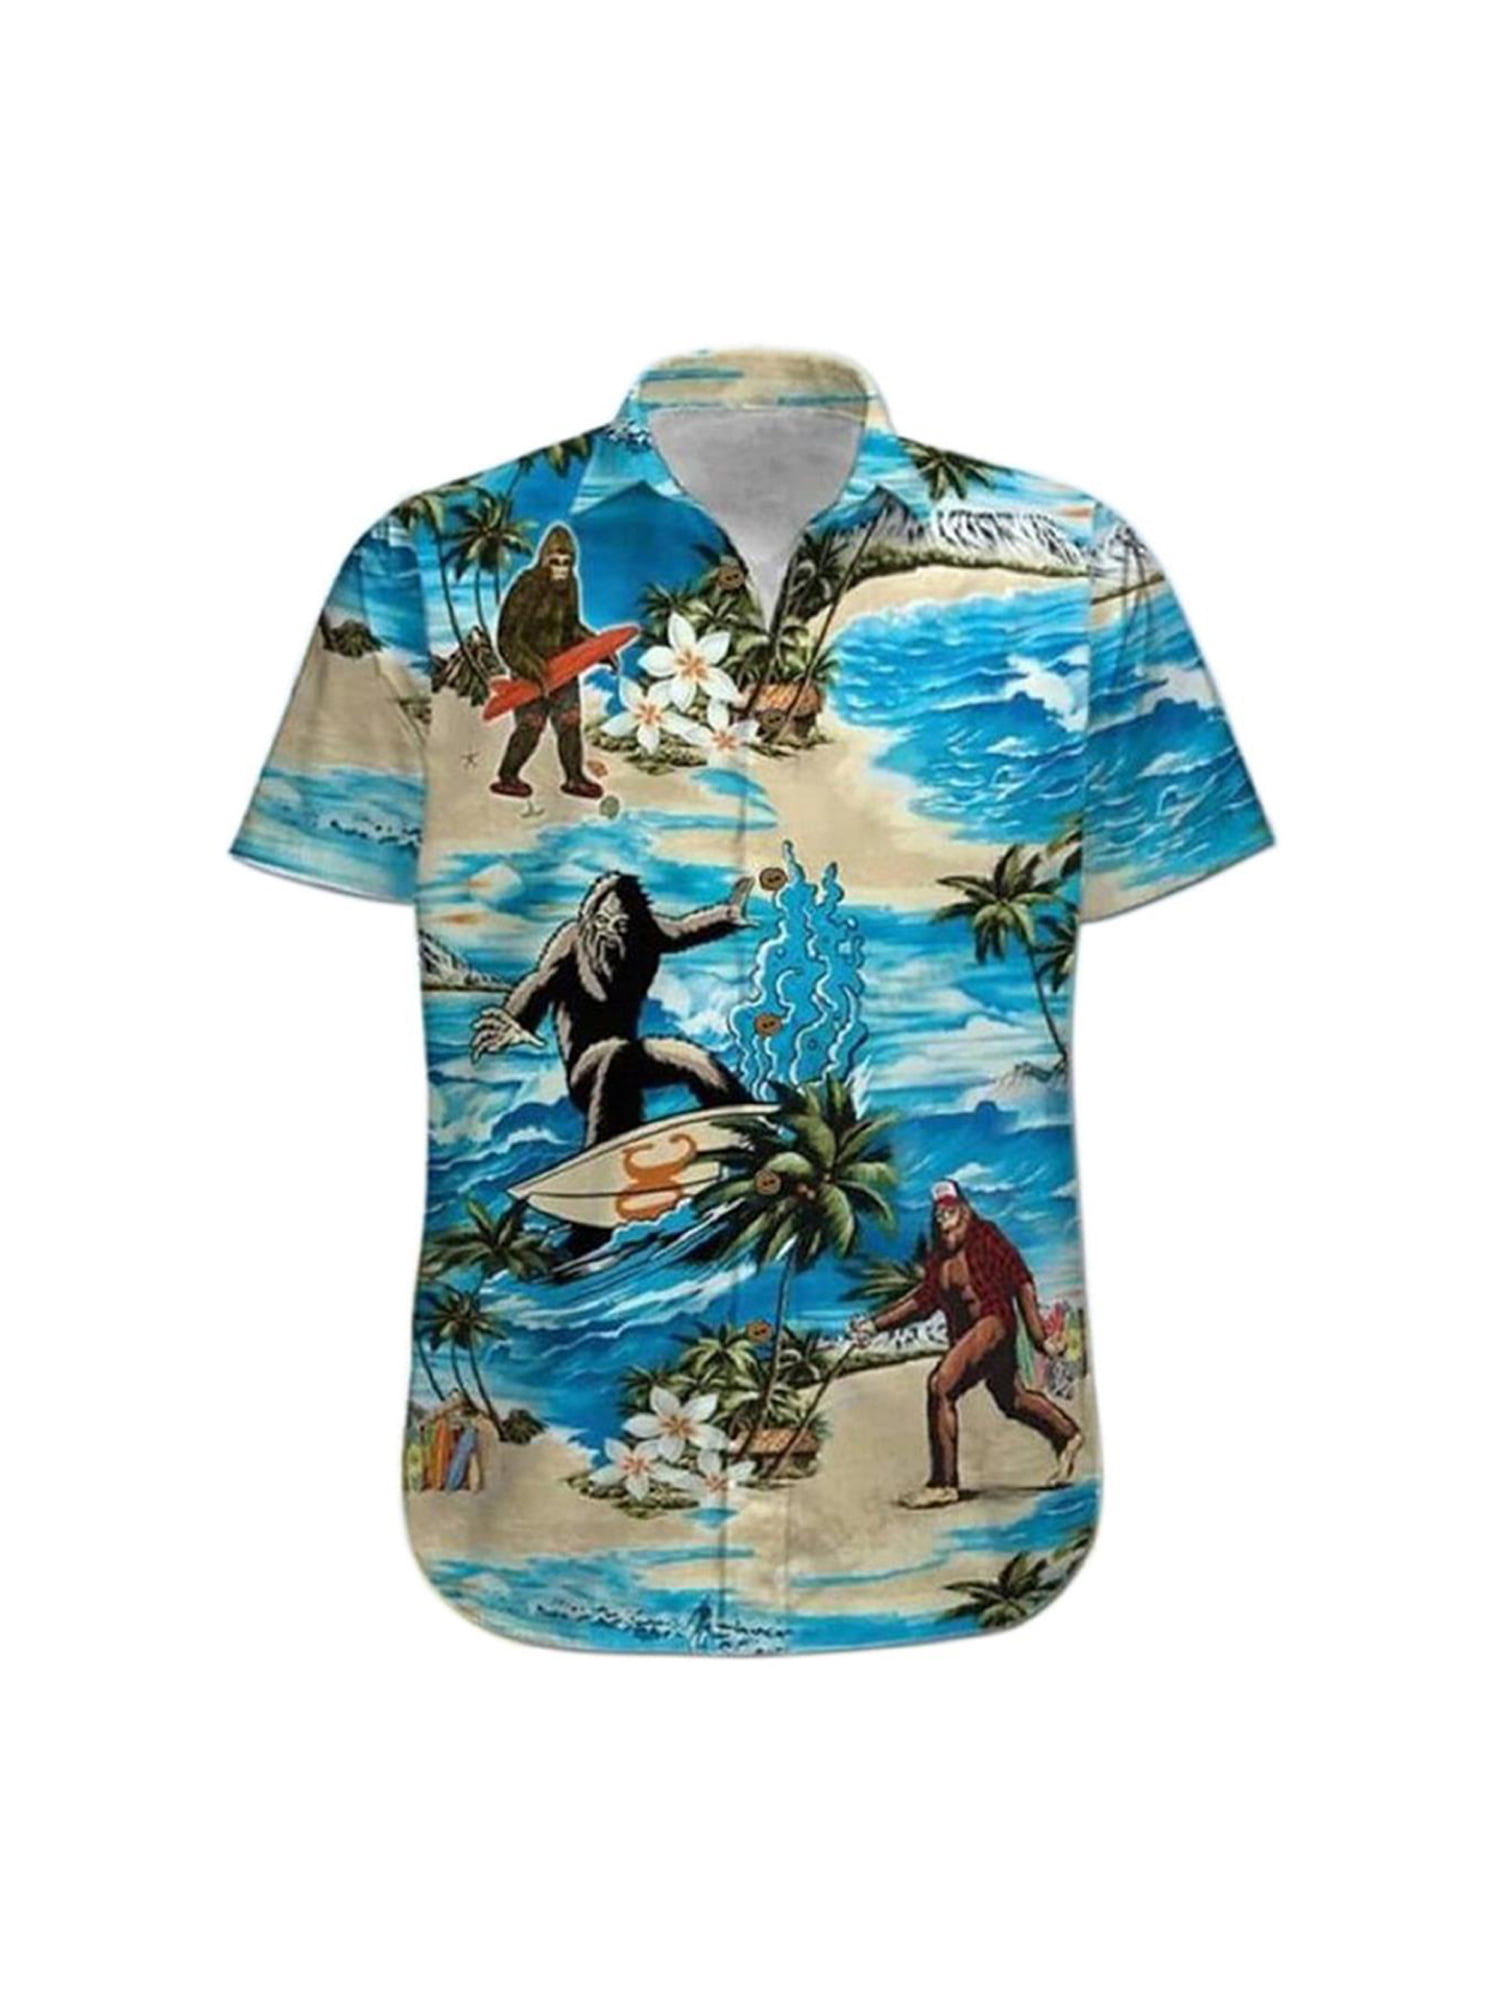 Summer Shirts Men Printing Animal Short Sleeve for Cool Mens Shirt